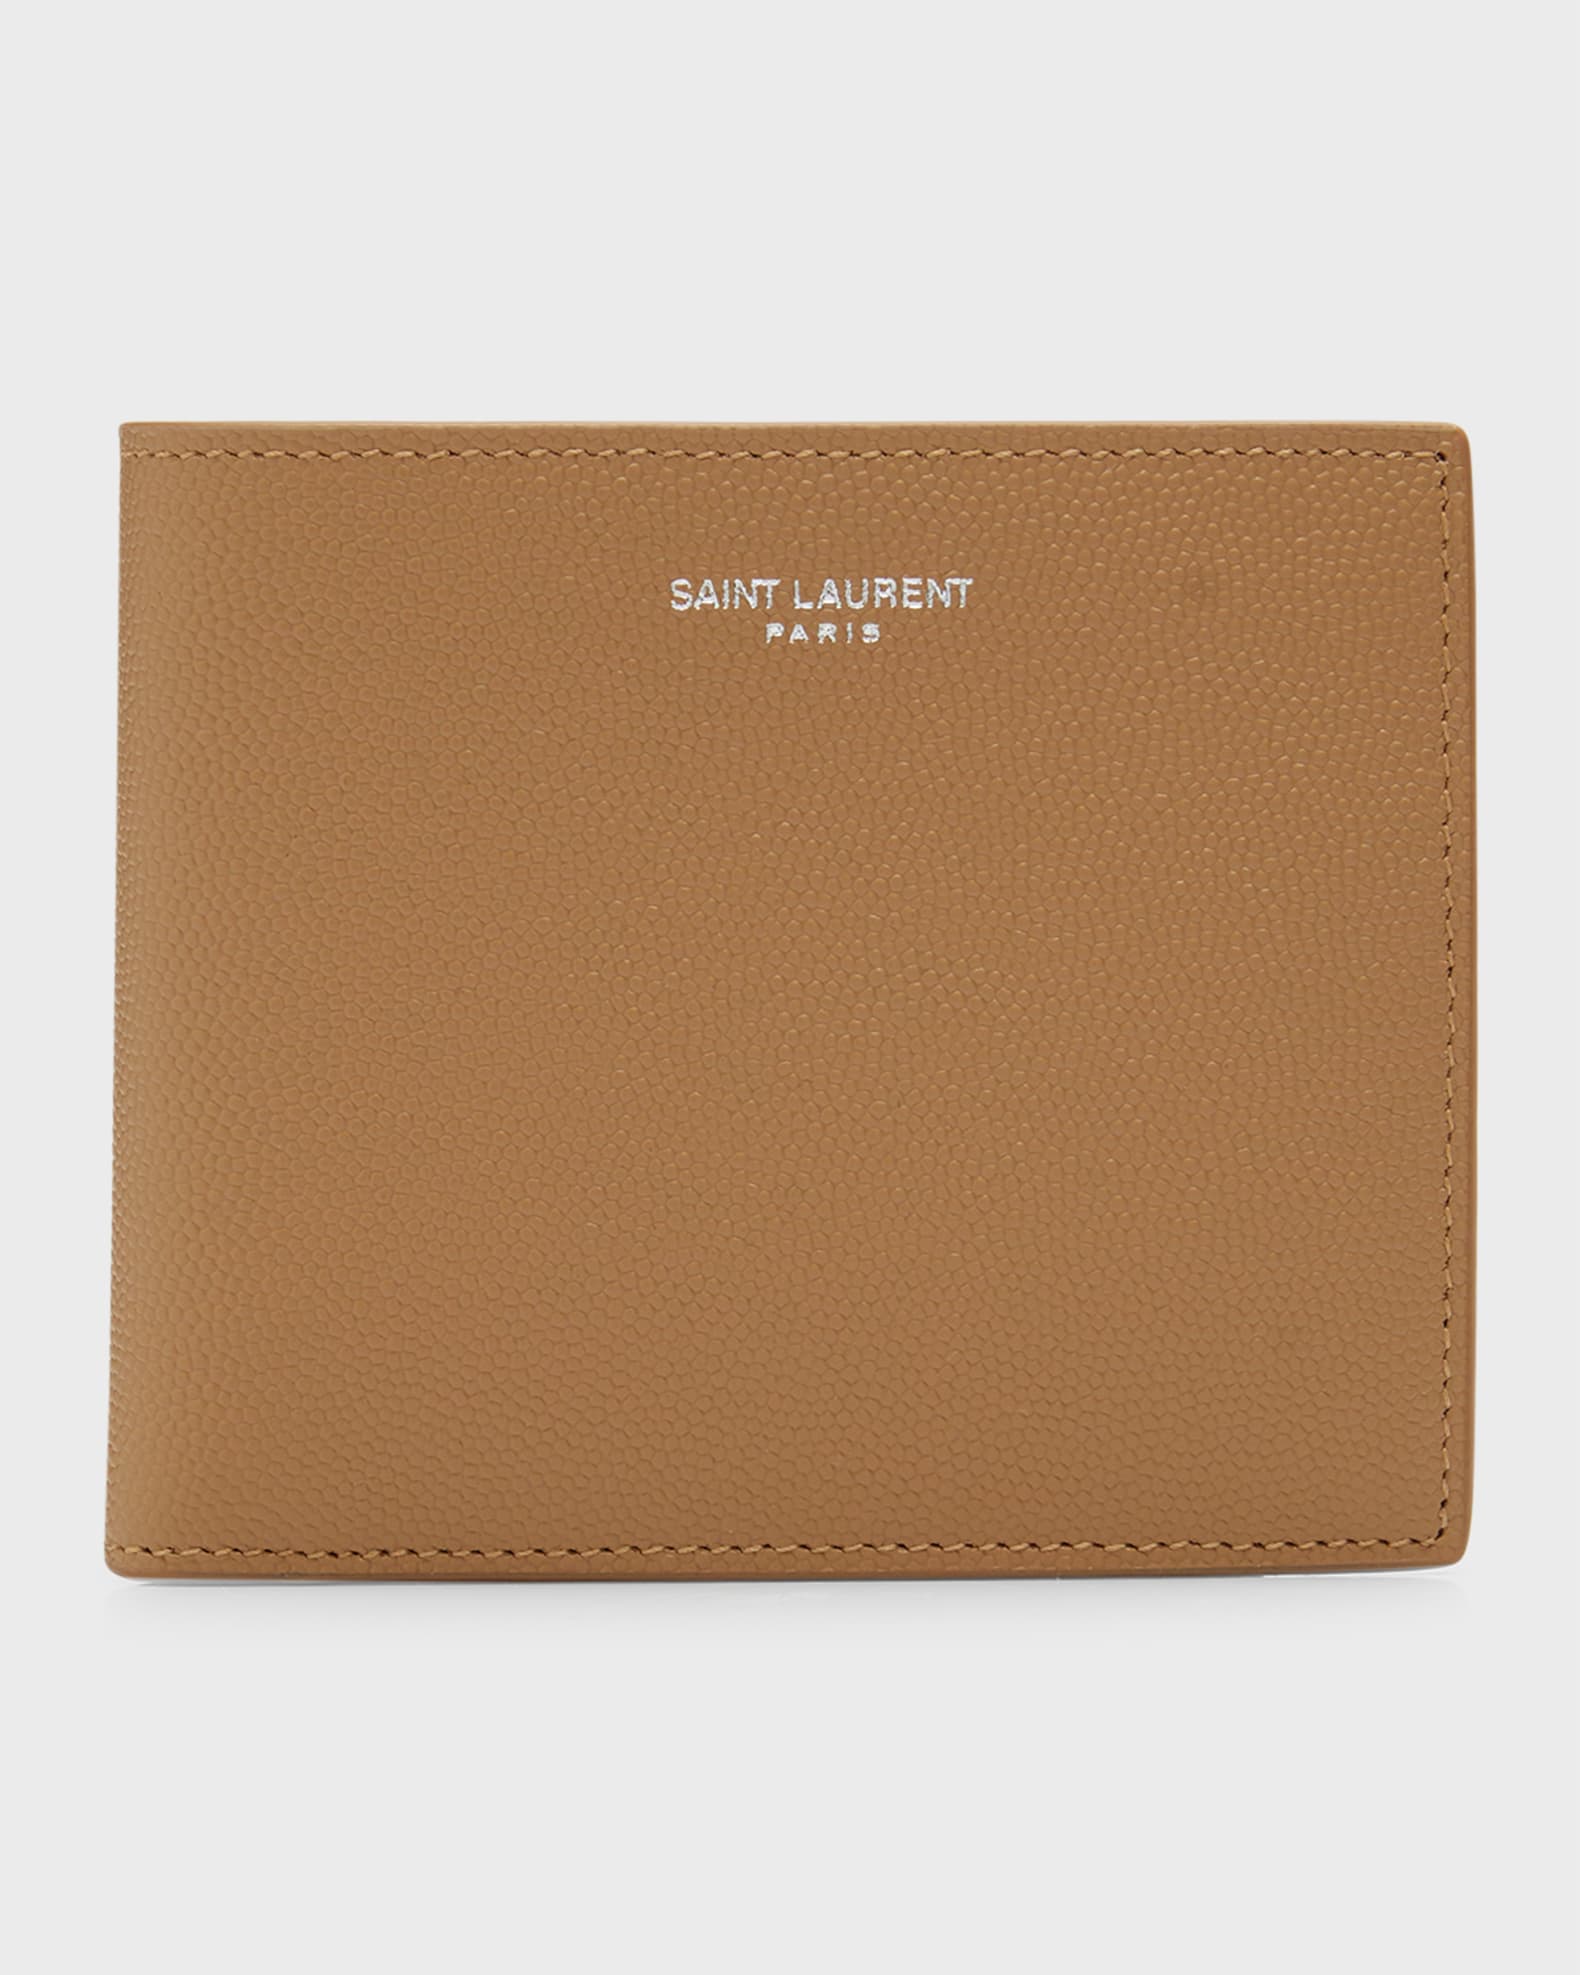 CASSANDRE East/West wallet in smooth leather, Saint Laurent